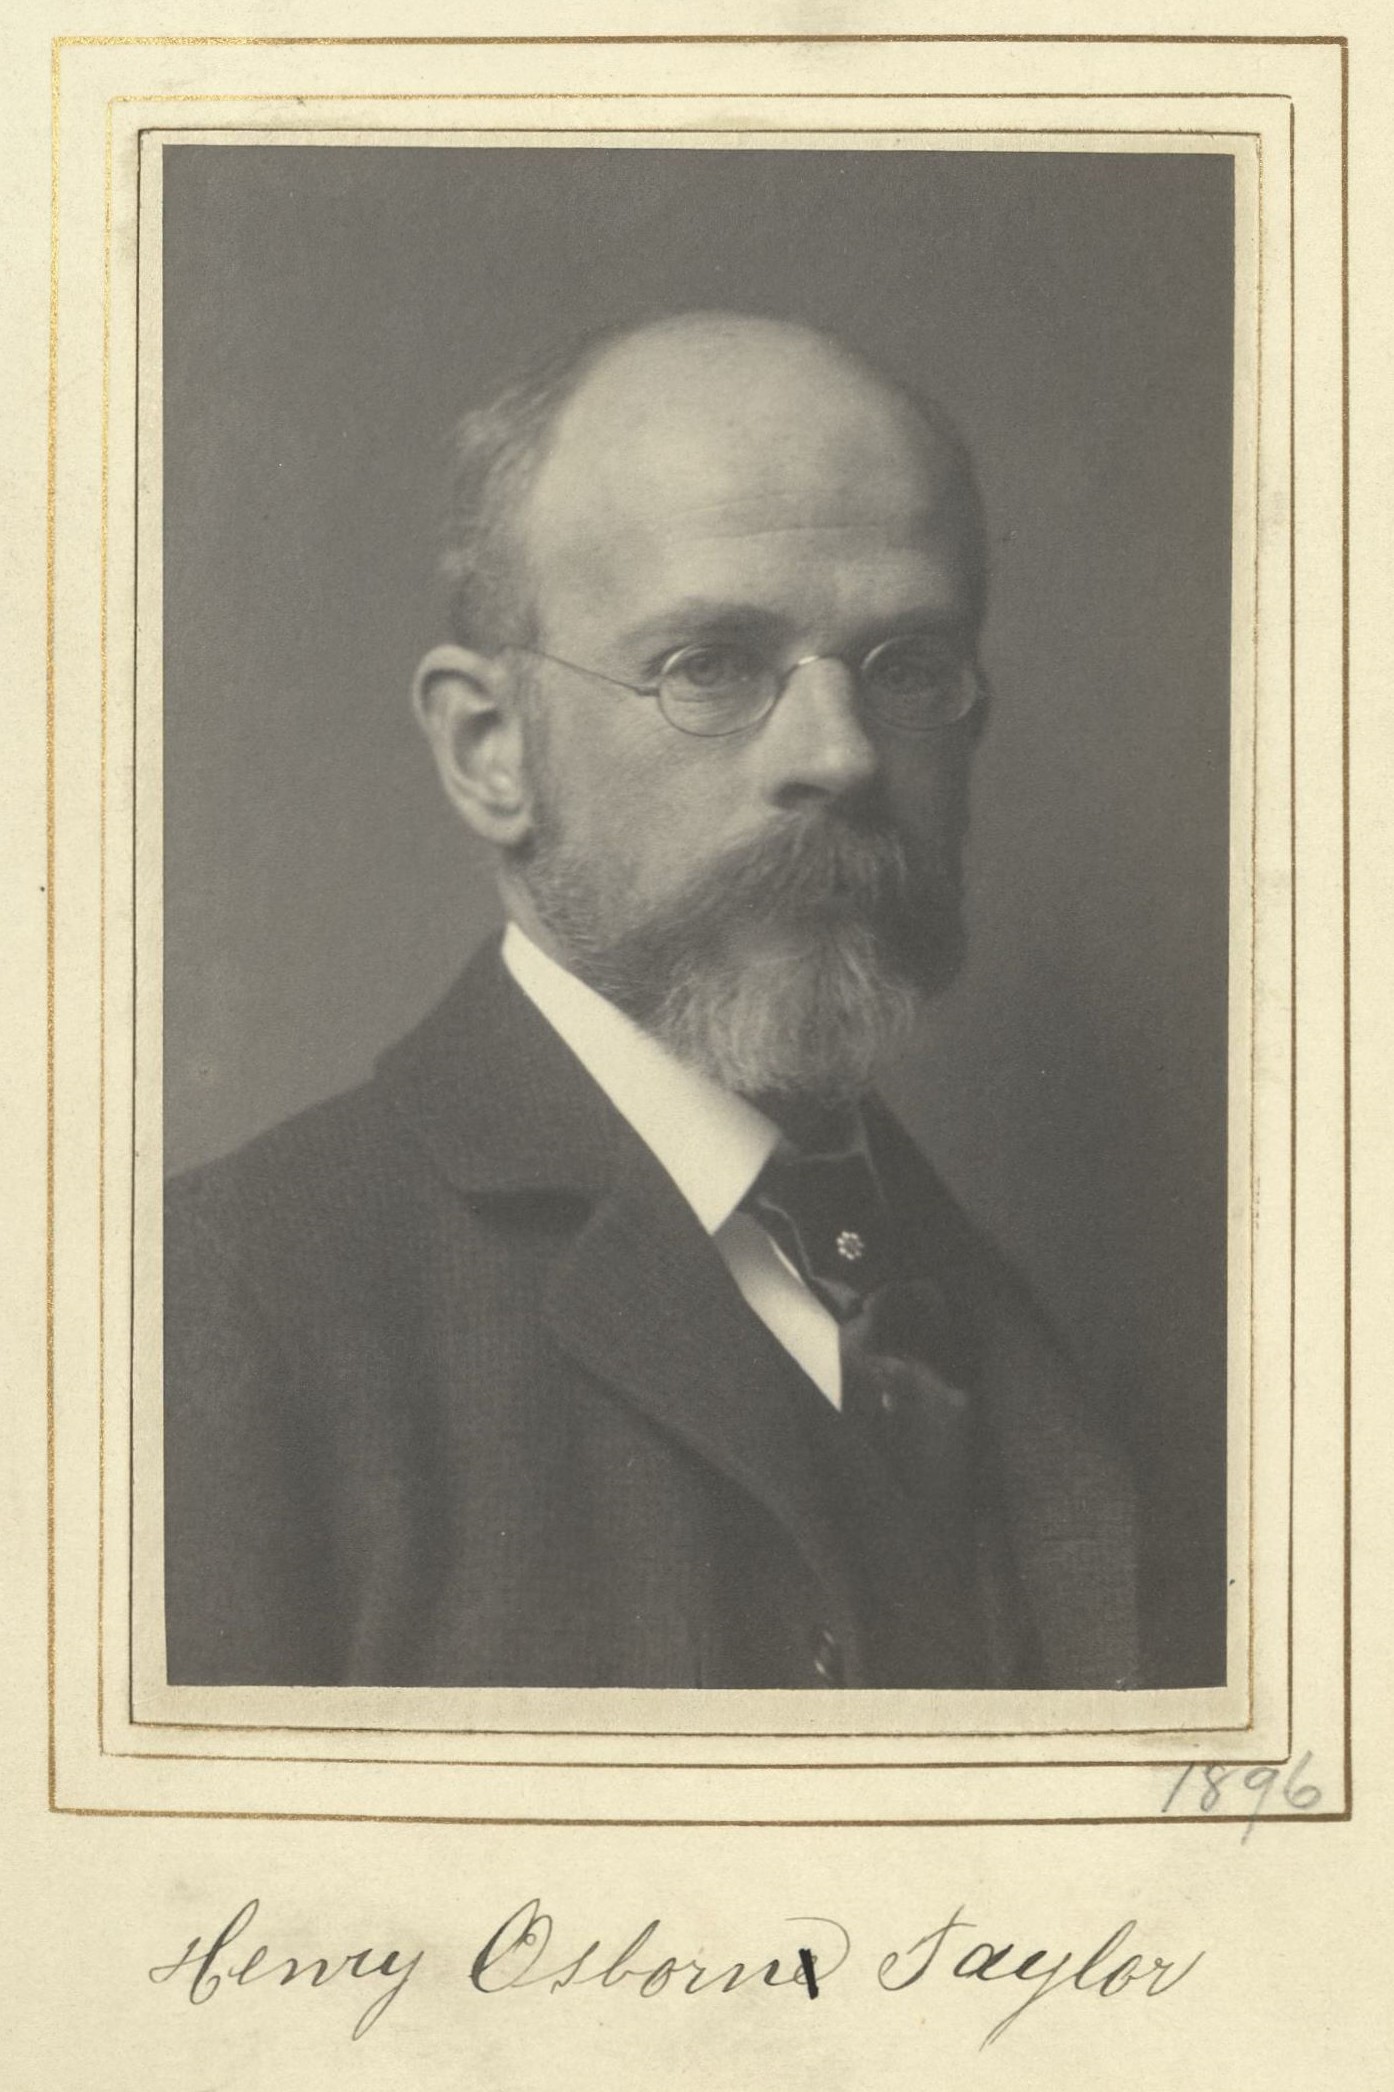 Member portrait of Henry O. Taylor